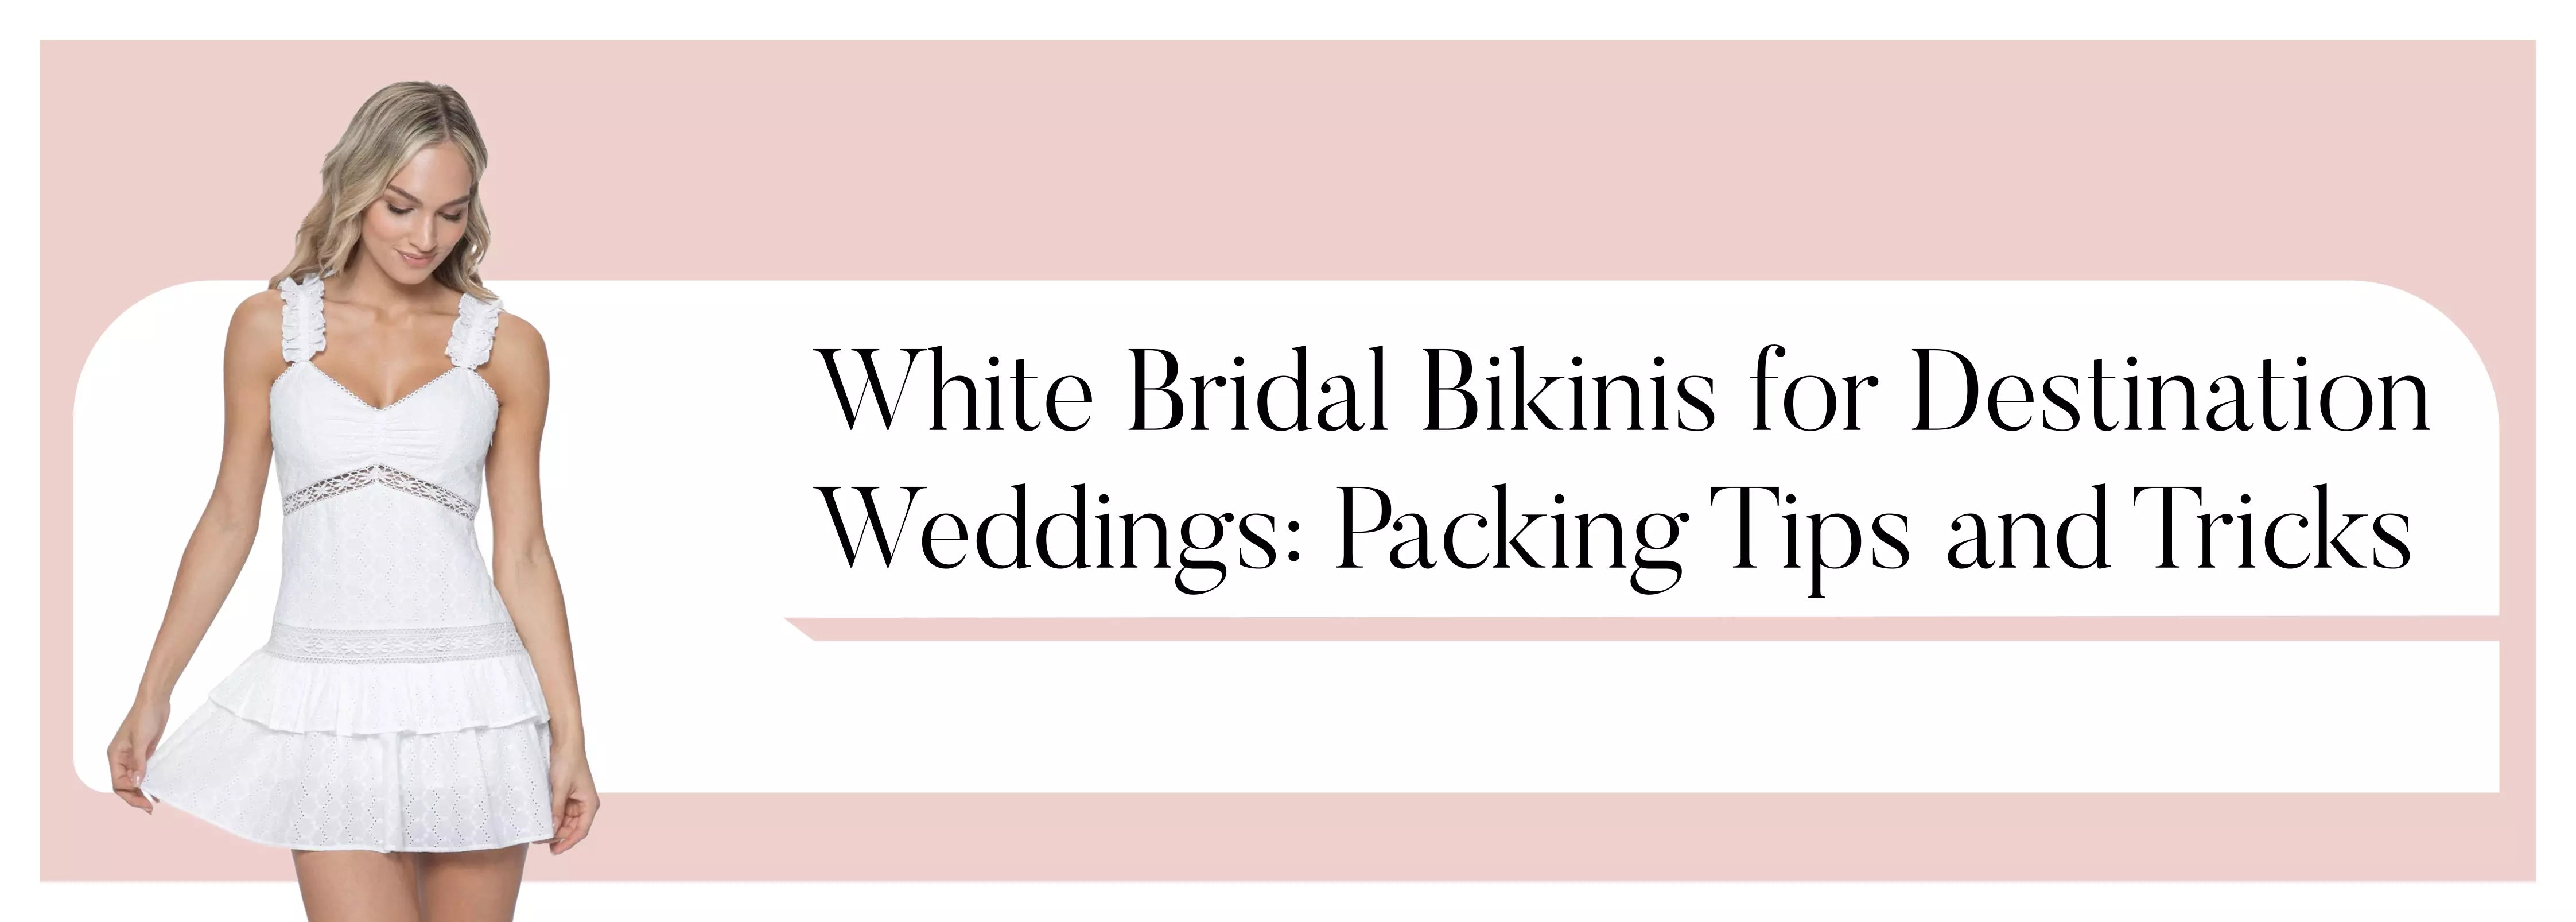 White Bridal Bikinis for Destination Weddings: Packing Tips and Tricks